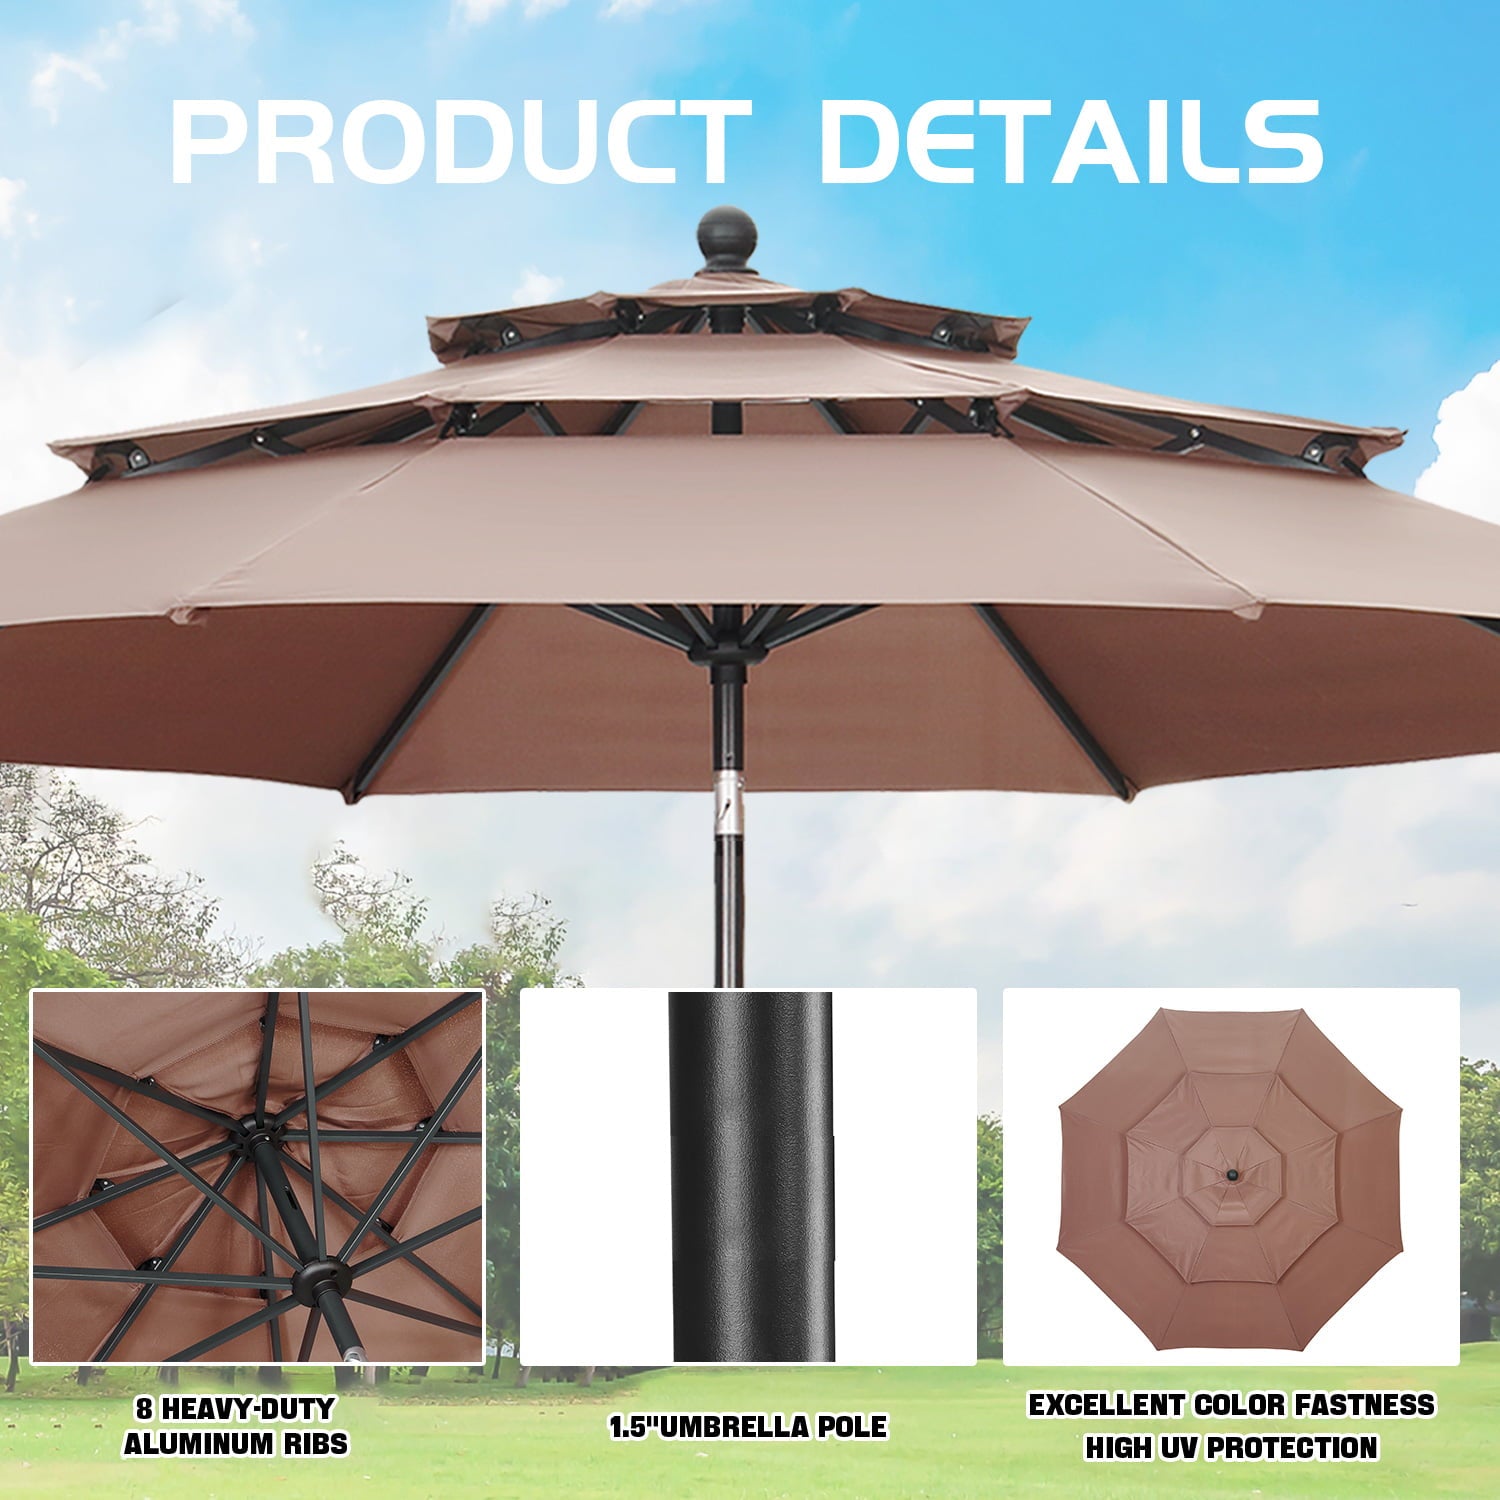 Autlaycil Patio Umbrella 10FT Outdoor Umbrella W/ 3 Tiers,Adjustable Outdoor Market Umbrella W/ Crank and Tilt,Table Umbrella for Garden, Lawn, Backyard and Pool, Coffee